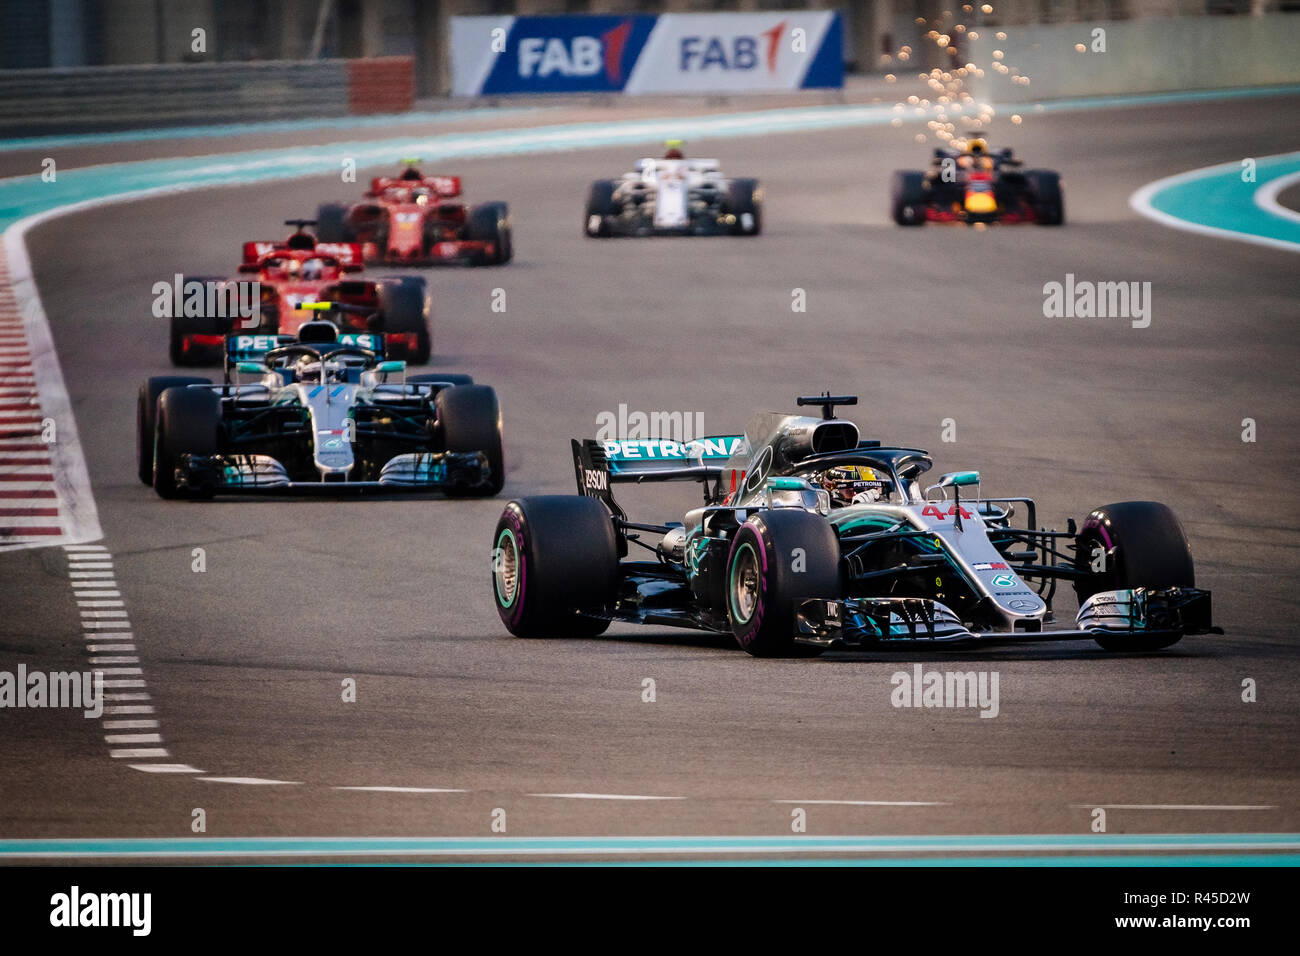 Abu Dhabi, VAE. 25 Nov, 2018. Mercedes AMG PETRONAS-F1-Teams British Pilot Lewis Hamilton (vorne) führt während des Formel 1 Grand Prix von Abu Dhabi auf dem Yas Marina Circuit in Abu Dhabi am 25. November 2018. Credit: Jure Makovec/Alamy leben Nachrichten Stockfoto